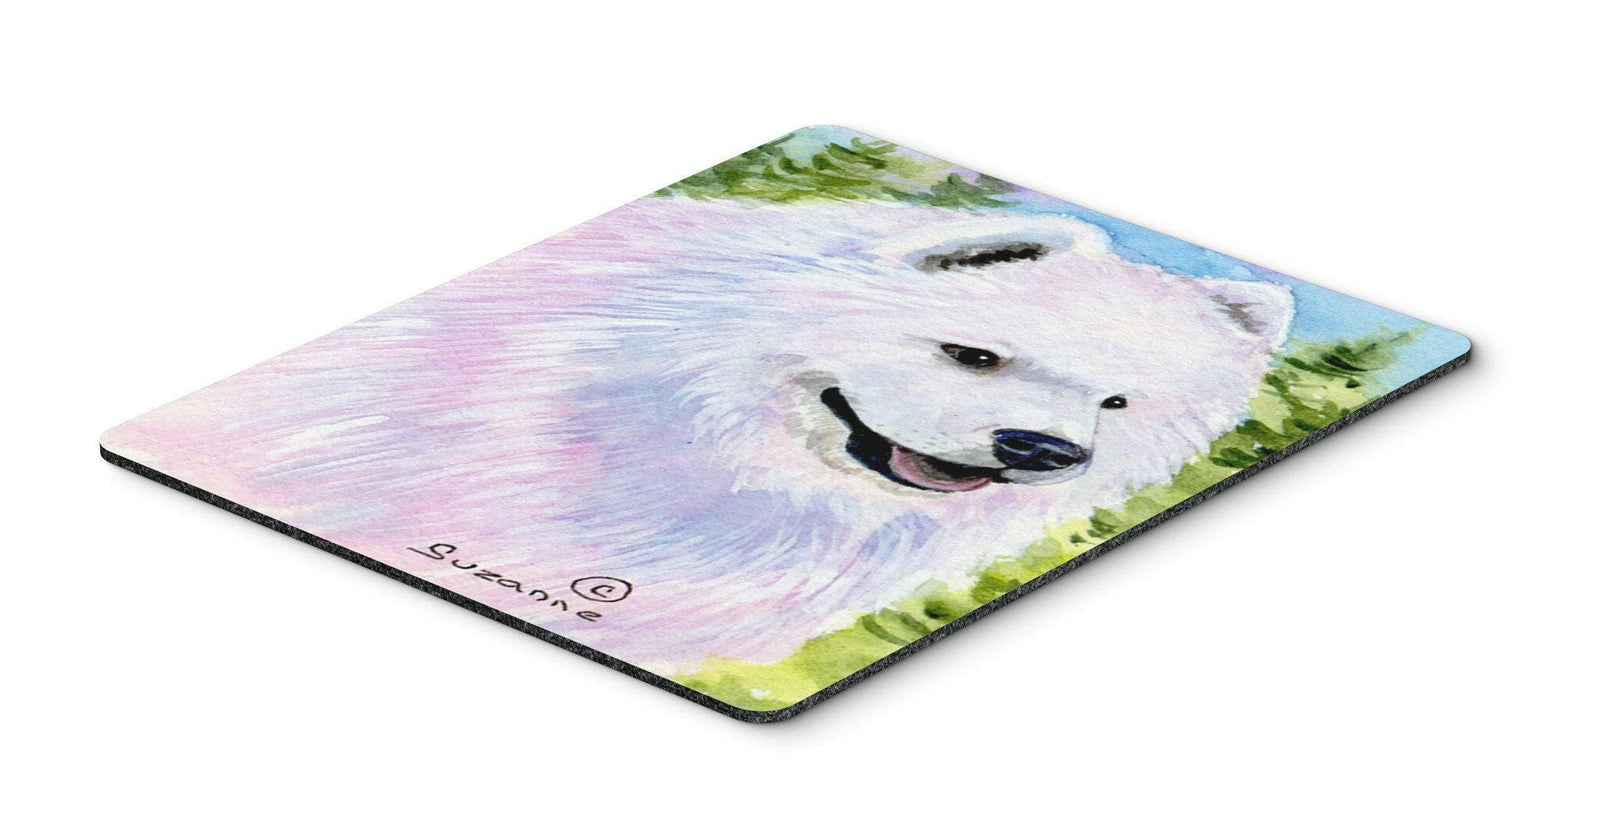 Samoyed Mouse Pad / Hot Pad / Trivet by Caroline's Treasures